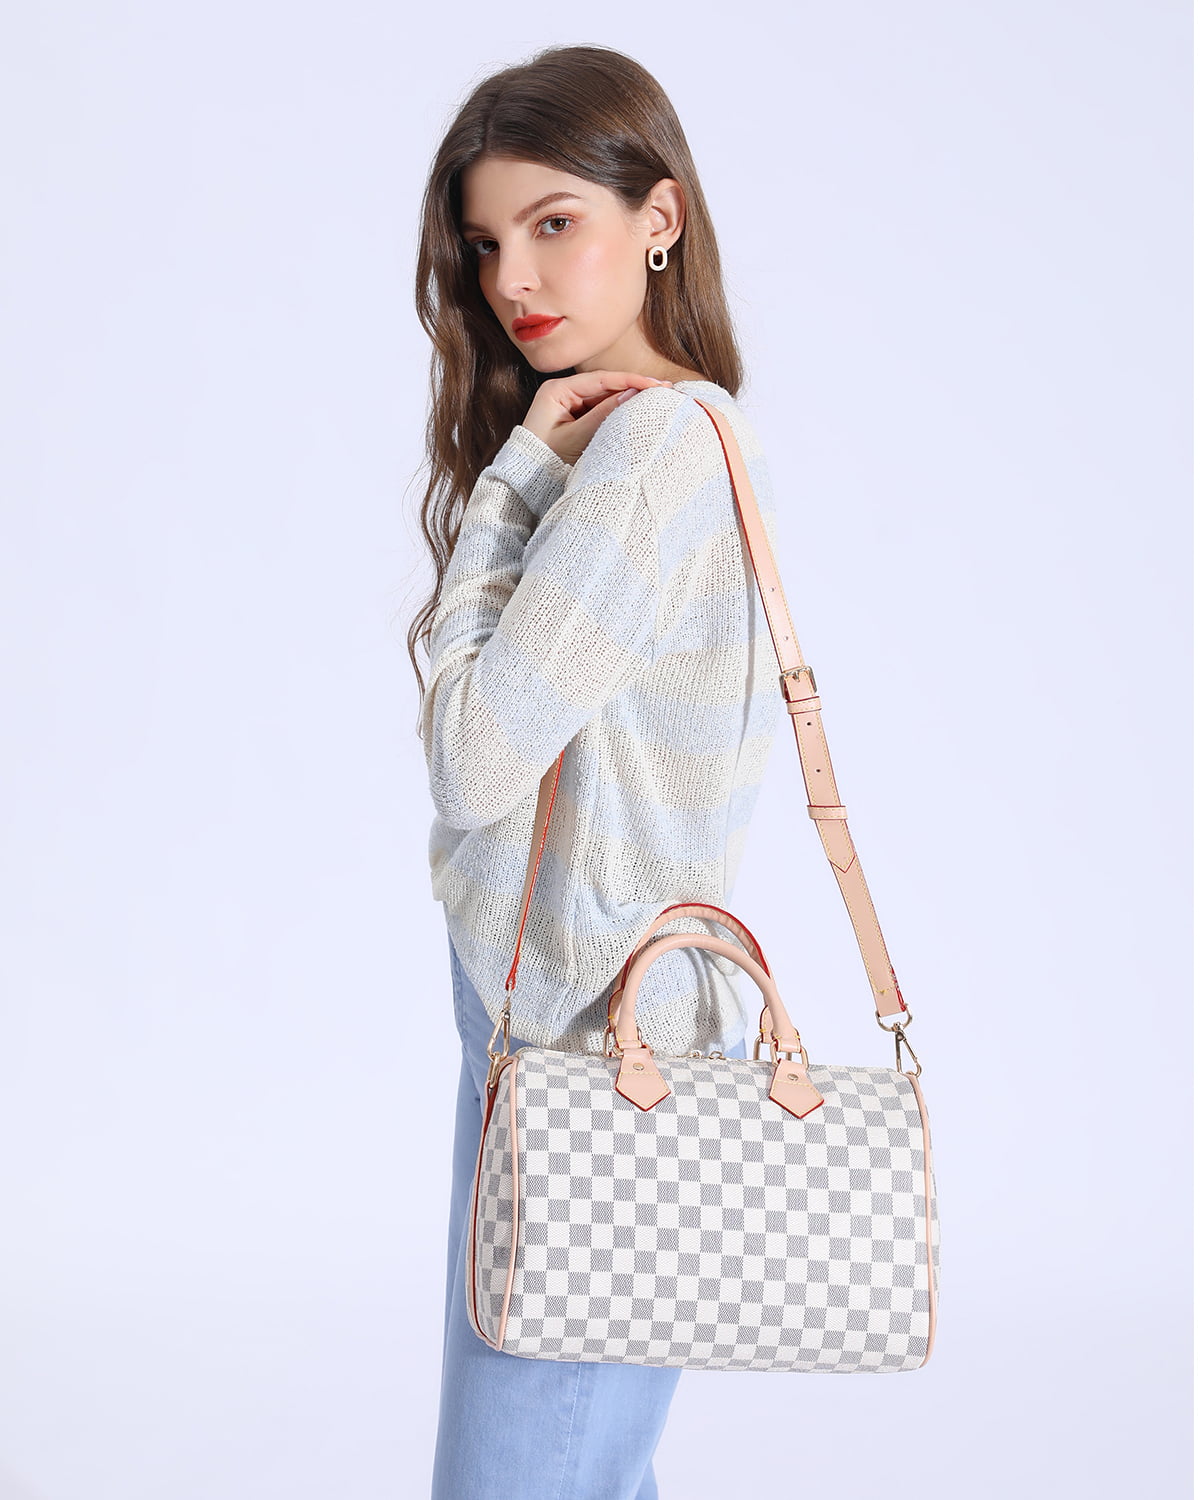 TWENTY FOUR White Checkered Handbags Leather Shoulder Bag and